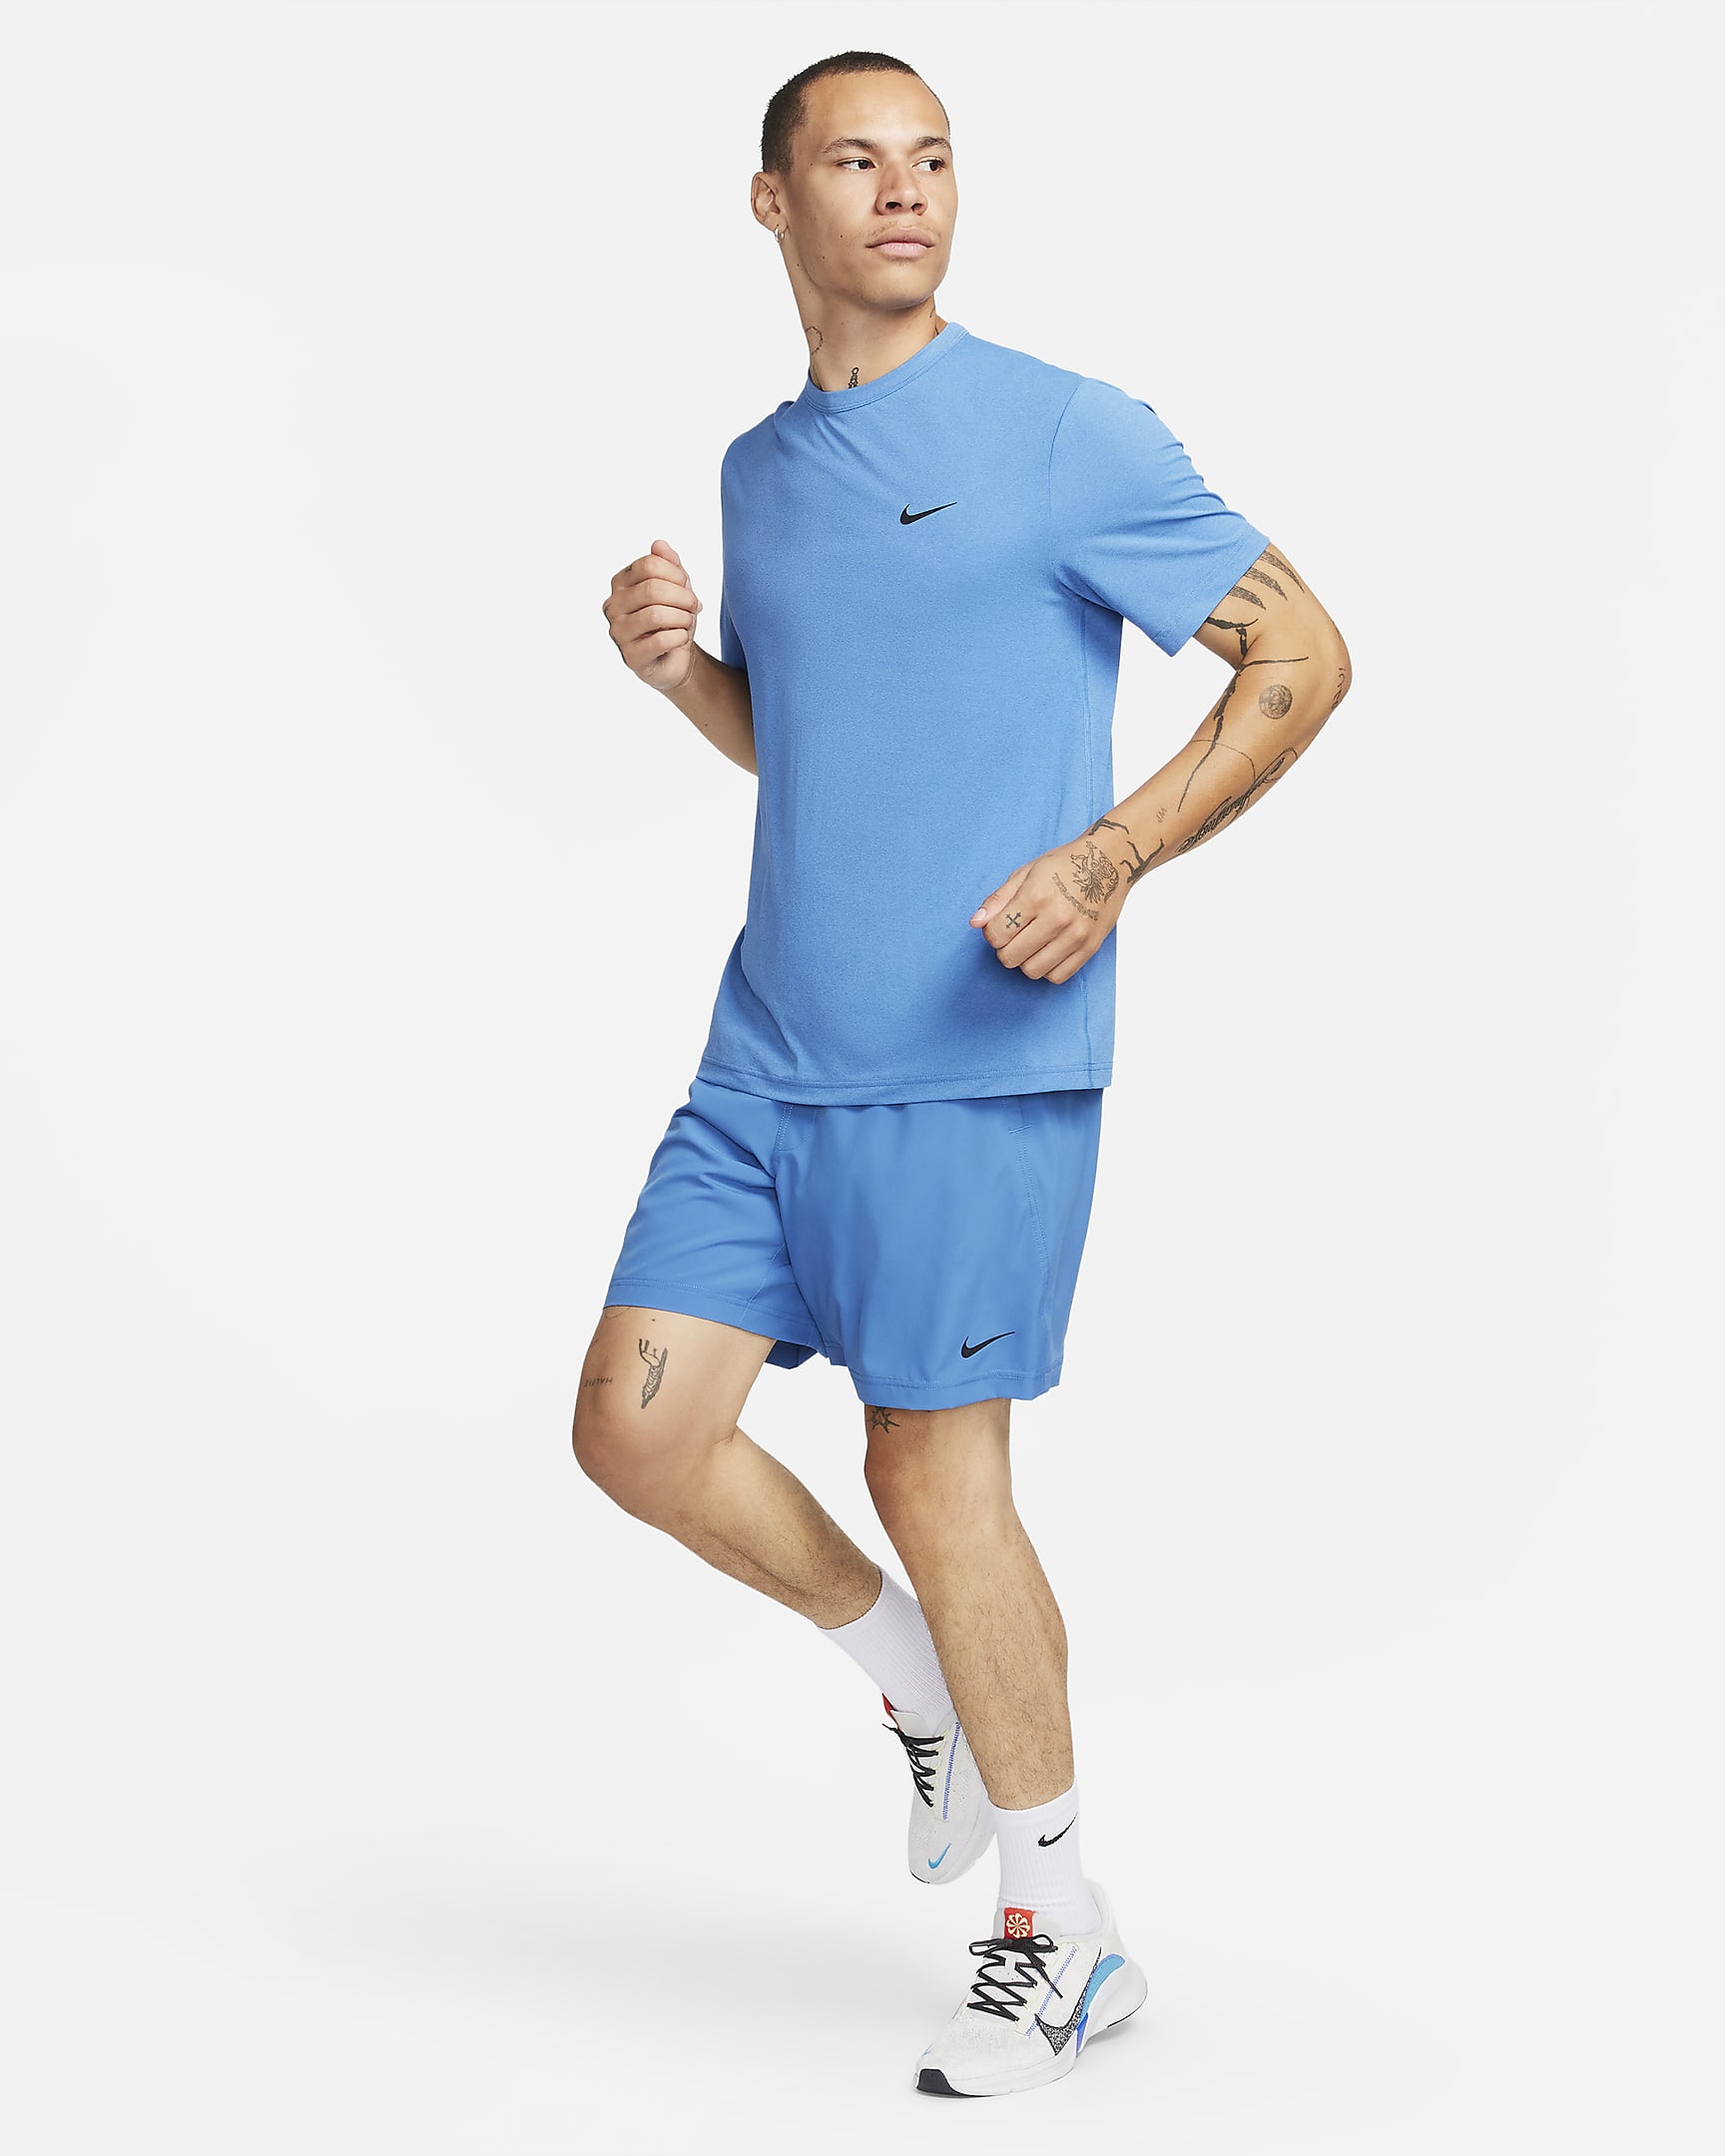 Nike Hyverse Men's Dri-FIT UV Short-sleeve Versatile Top - Star Blue/Black